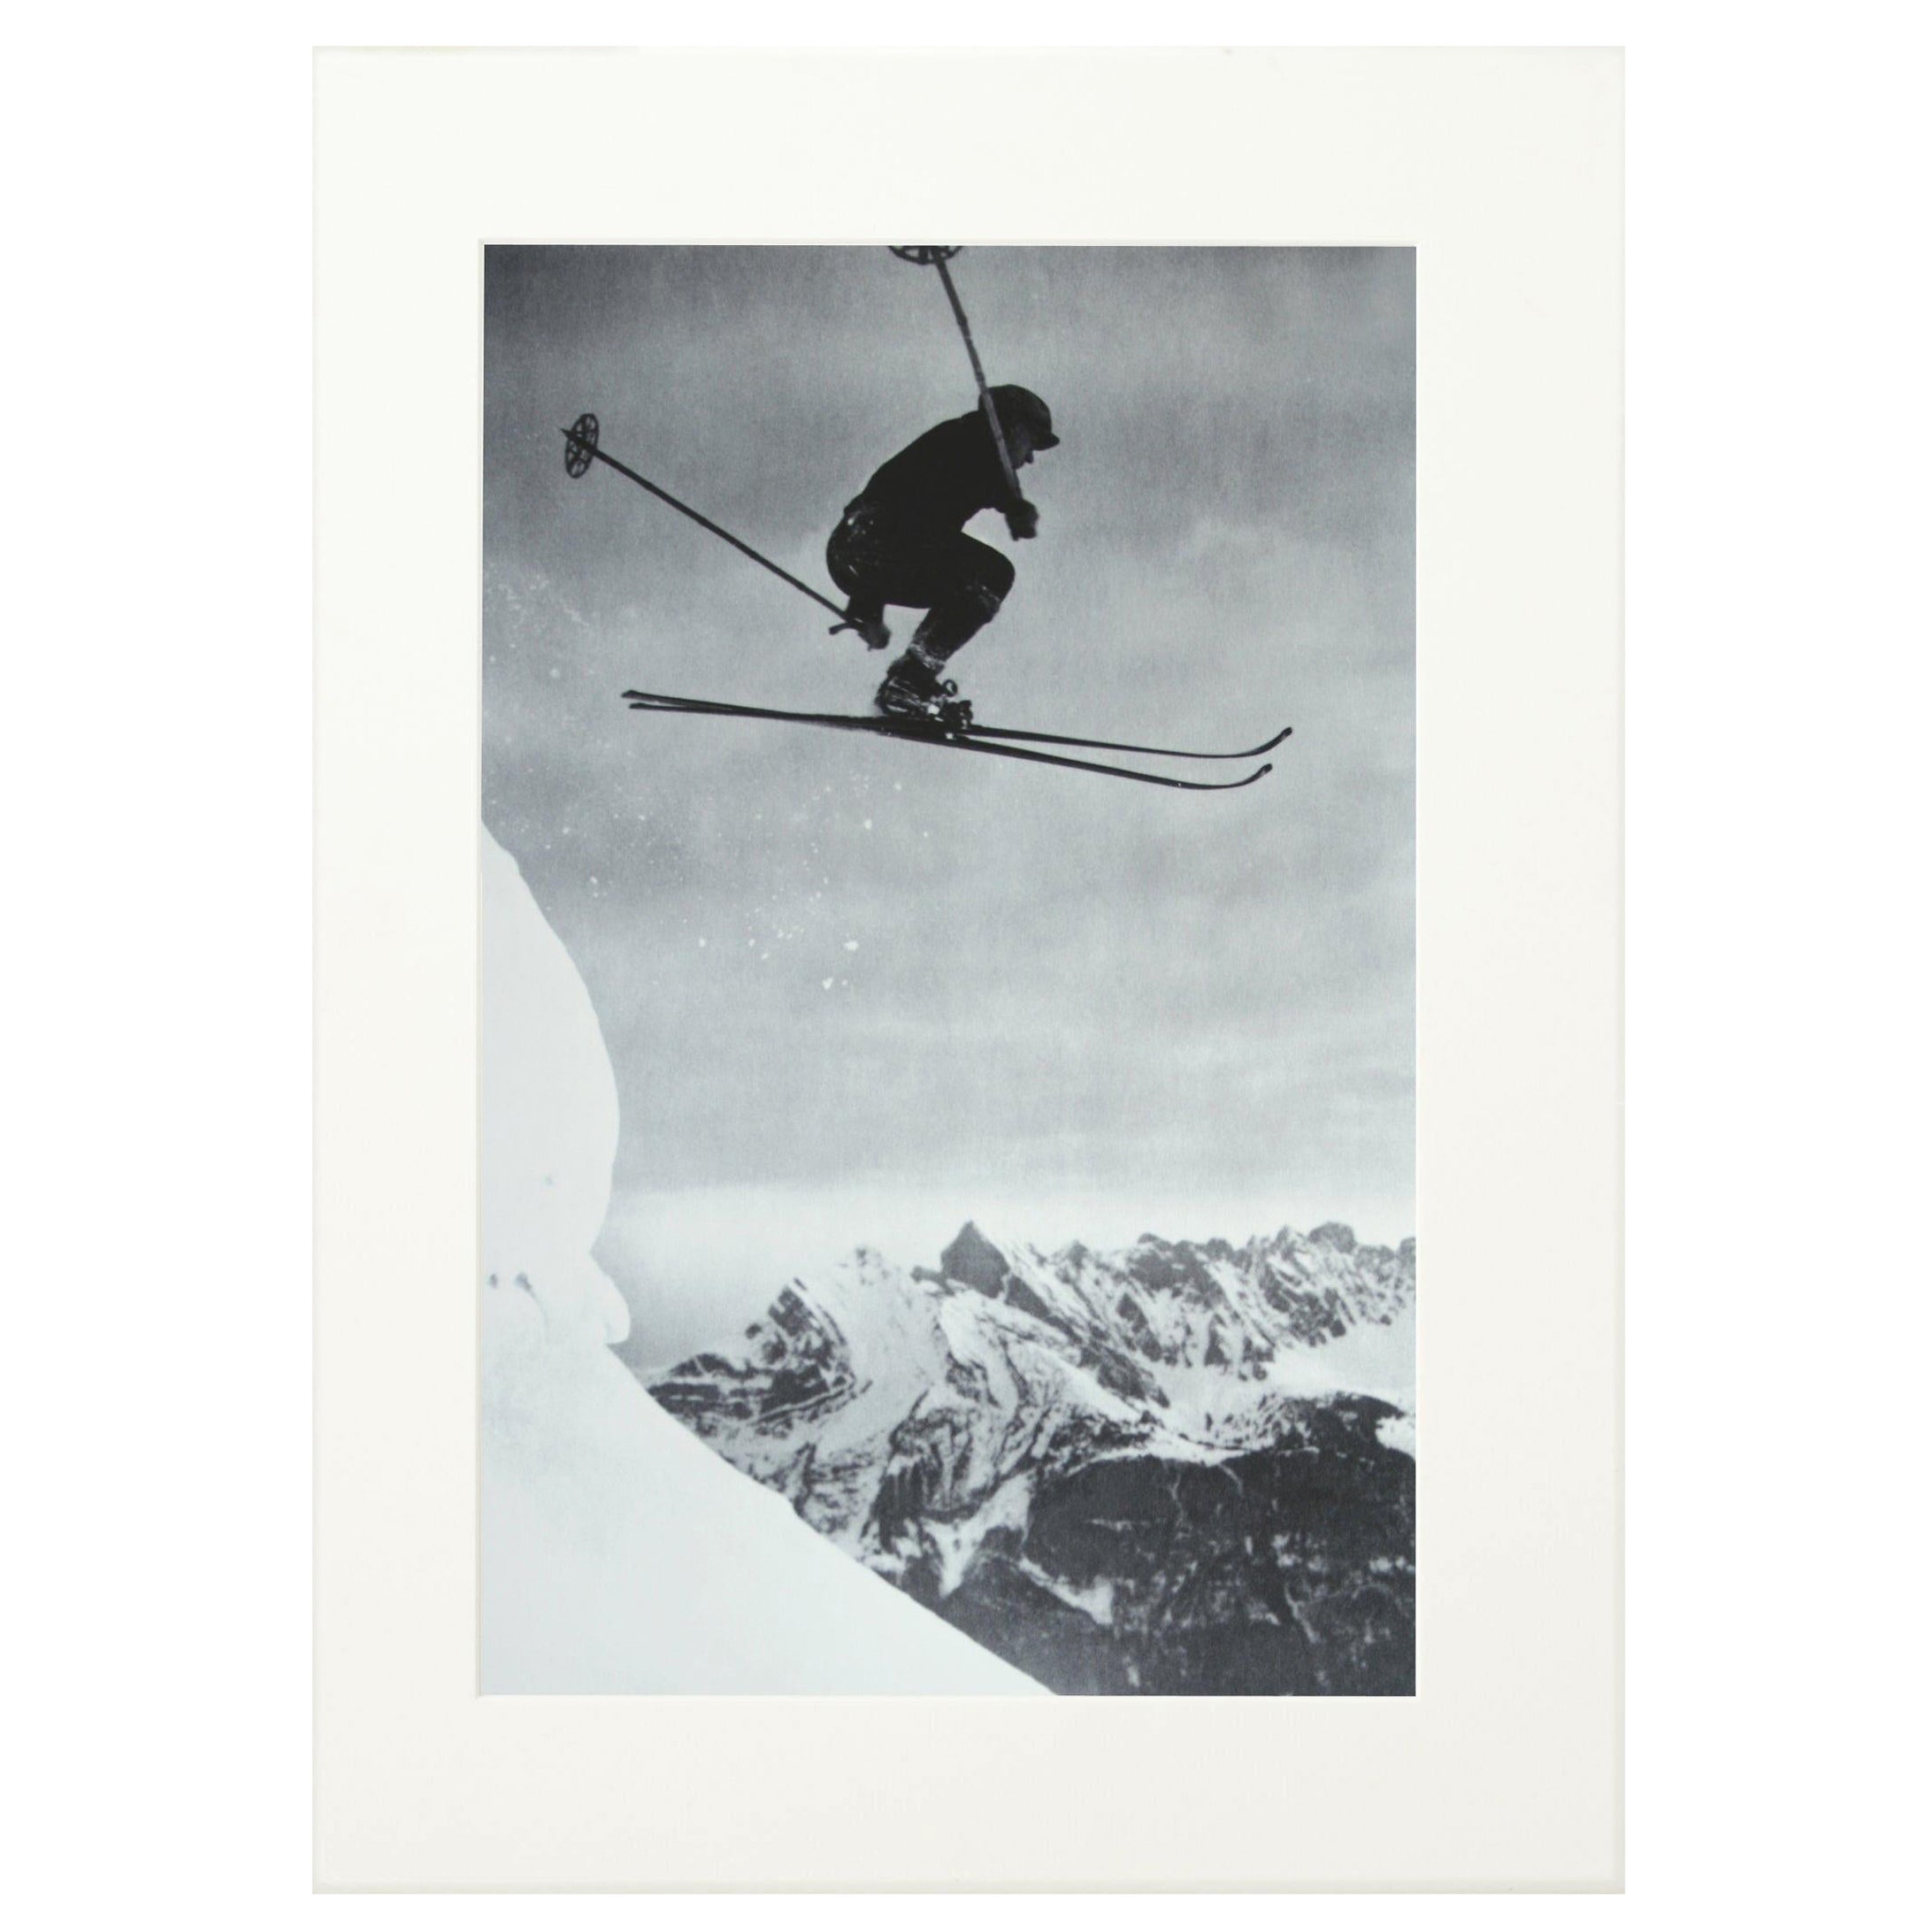 Photographie de ski alpin ancienne vintage, Der Sprung en vente